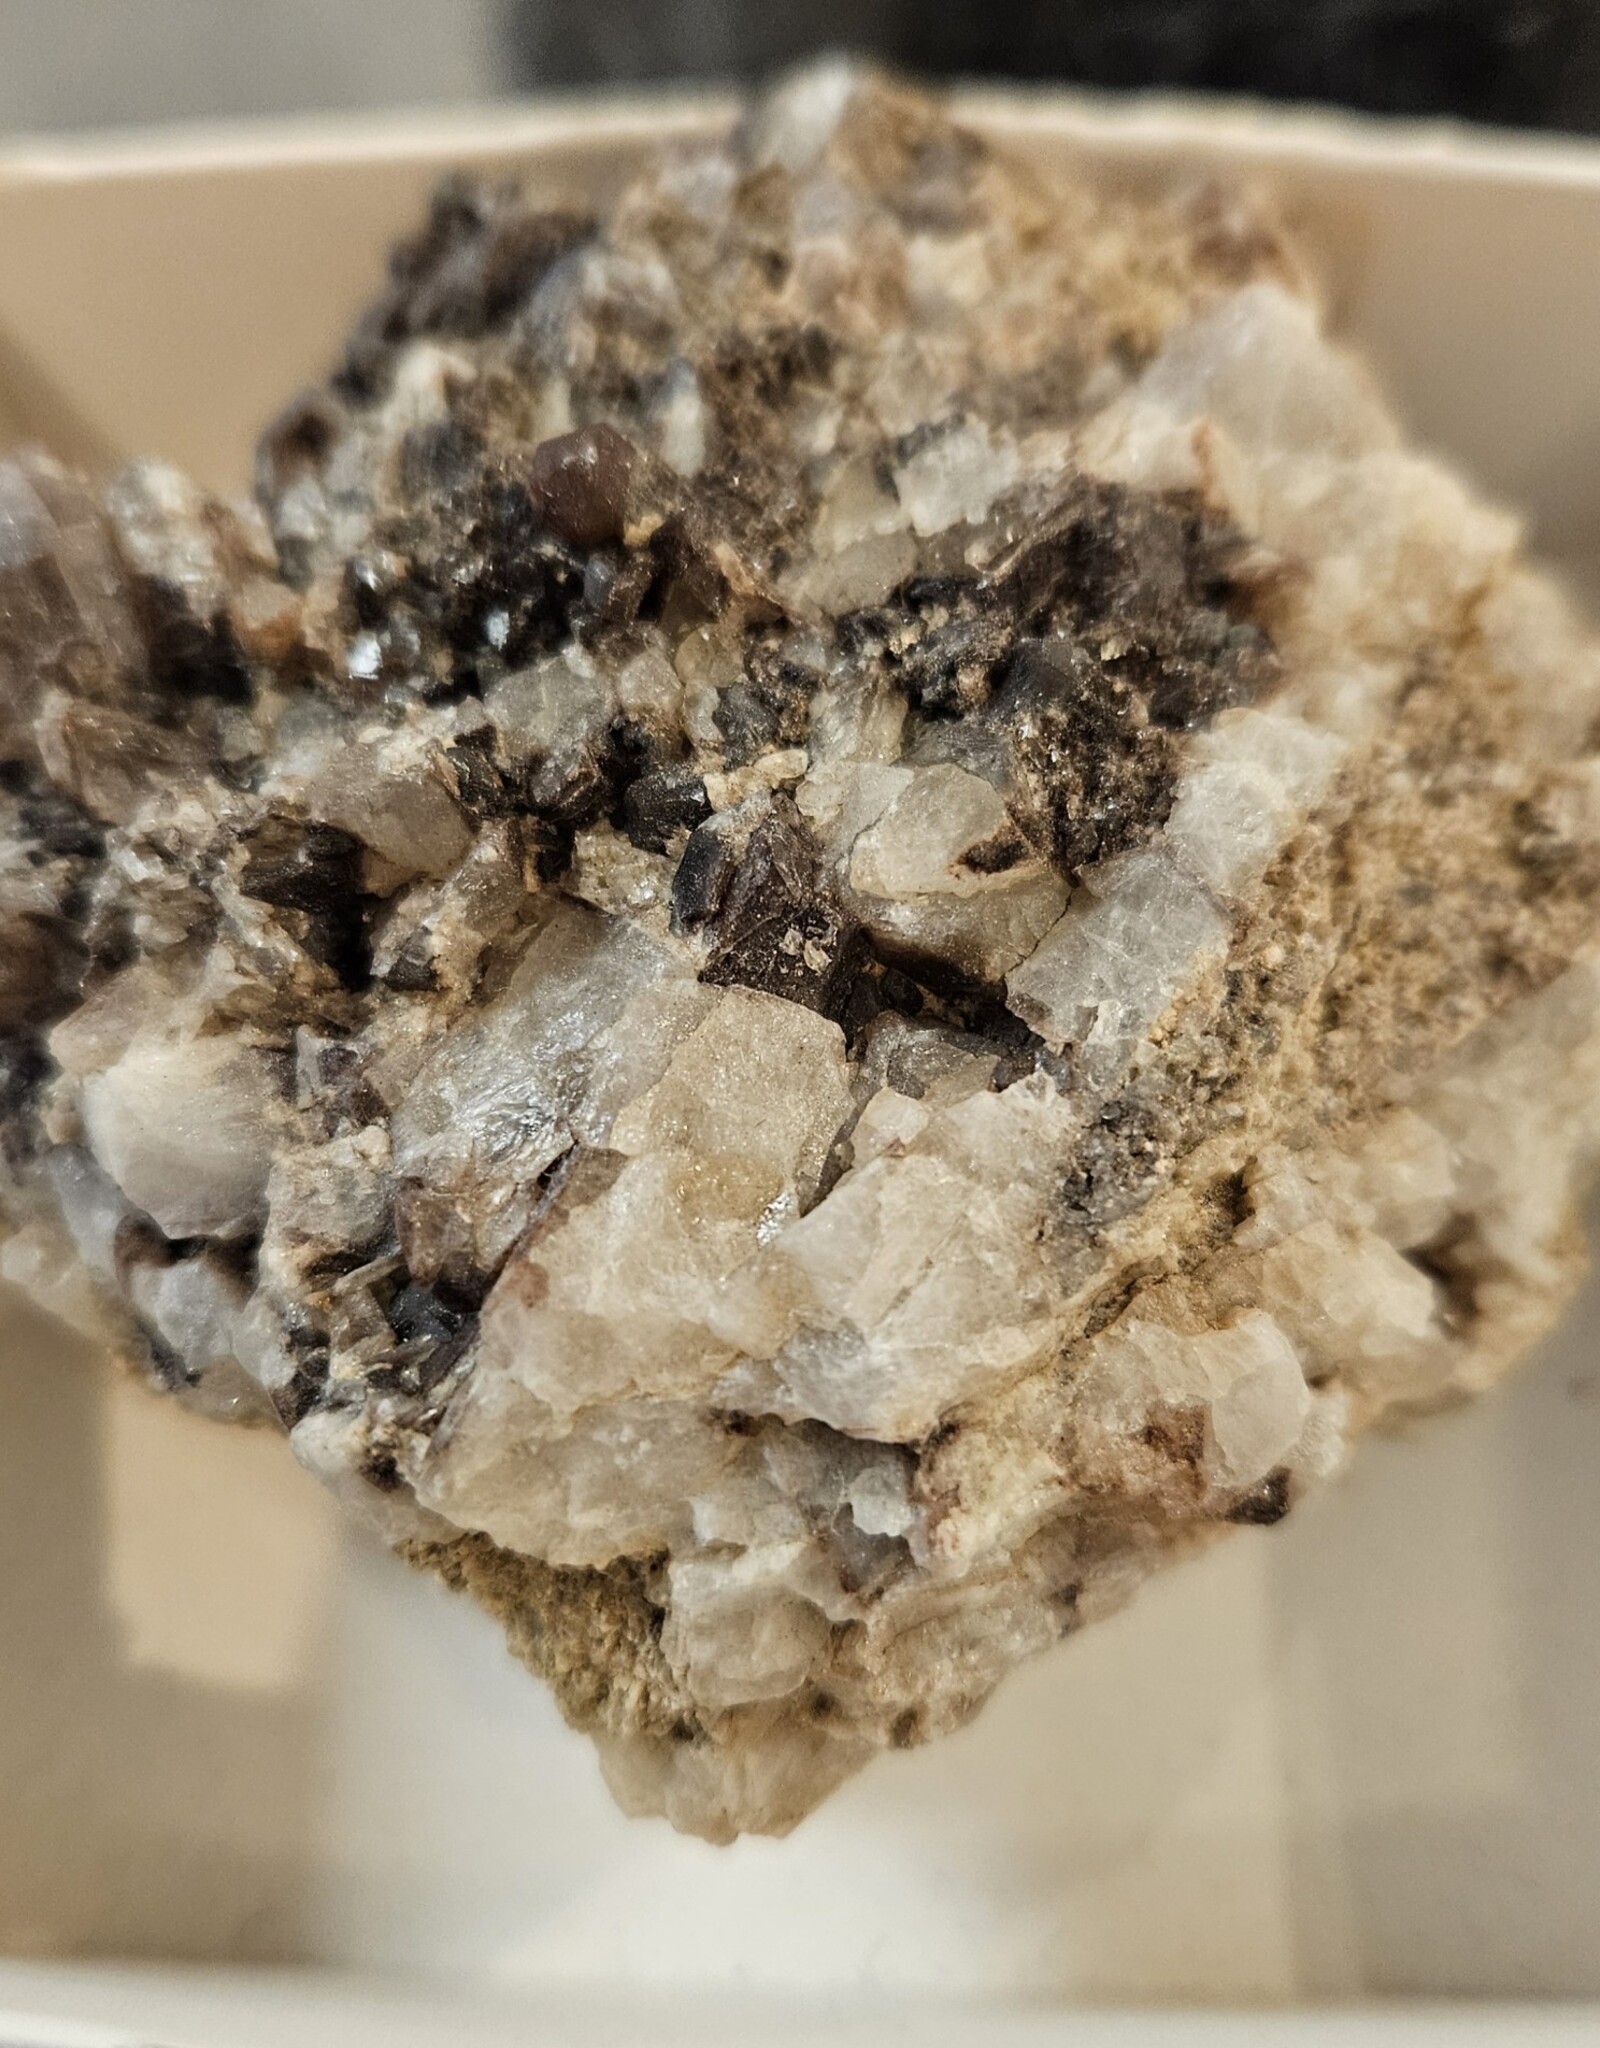 Smoky Quartz Cluster with Hematite Inclusions Medium